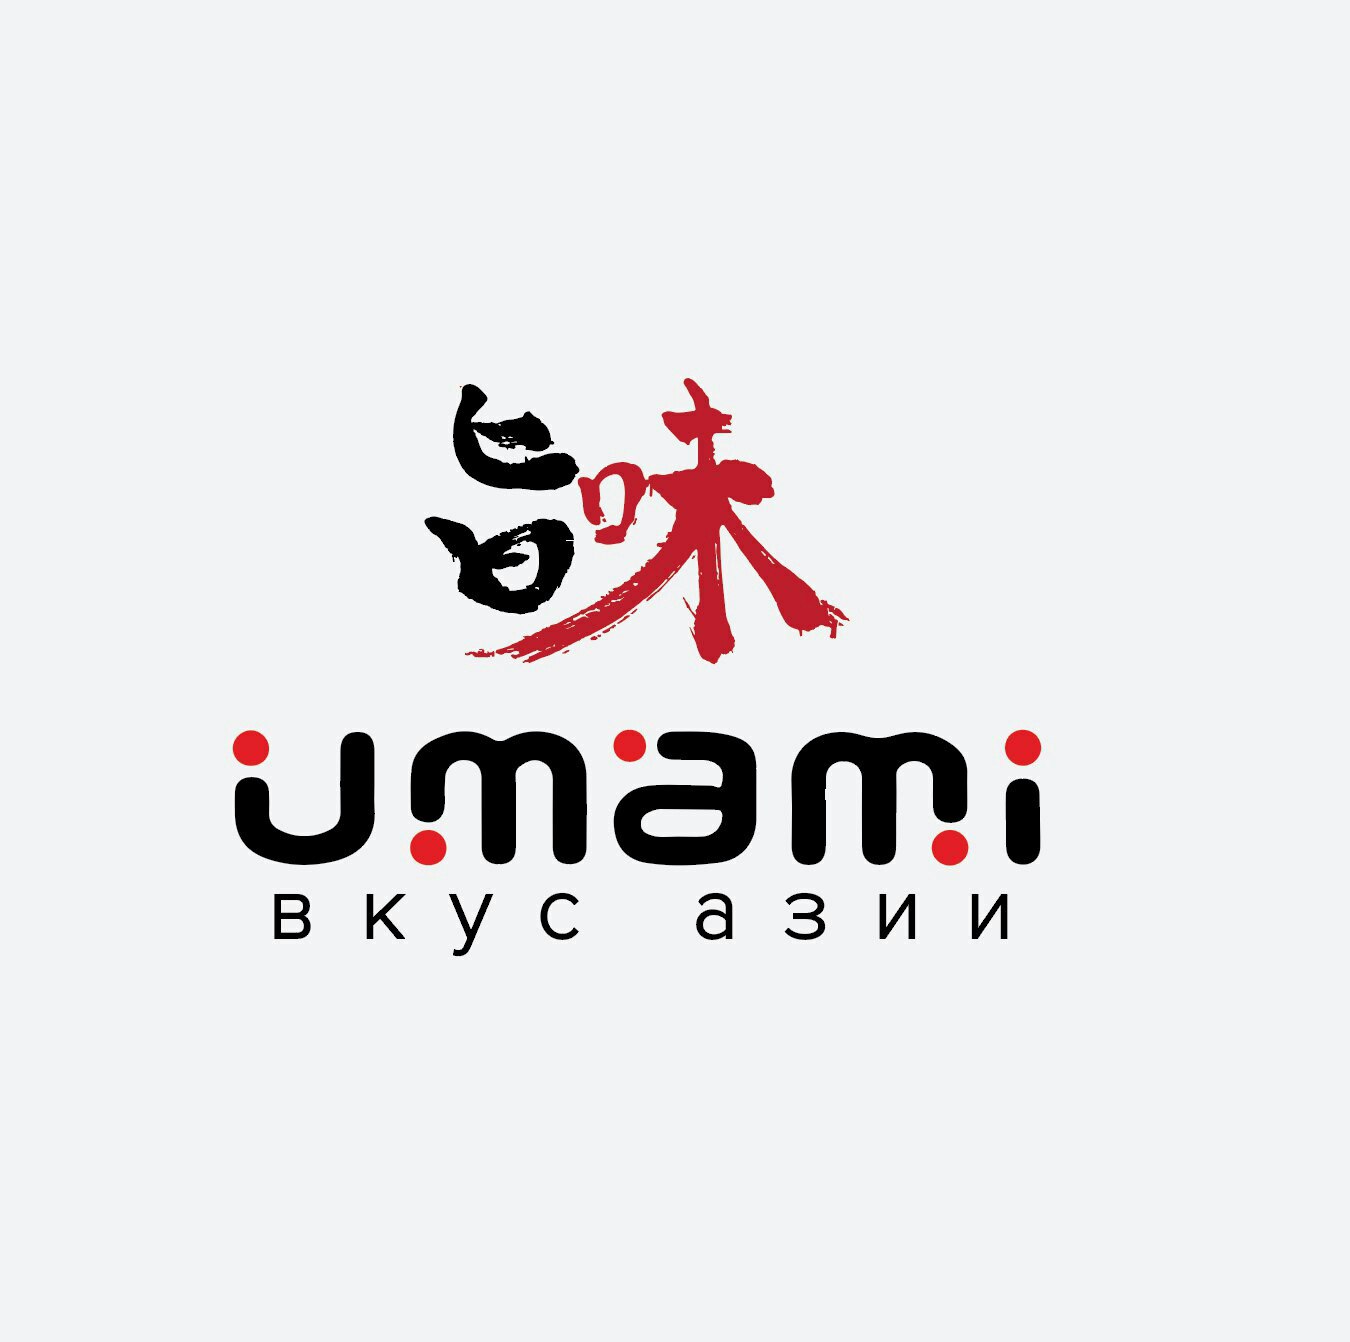 Umami Ramen